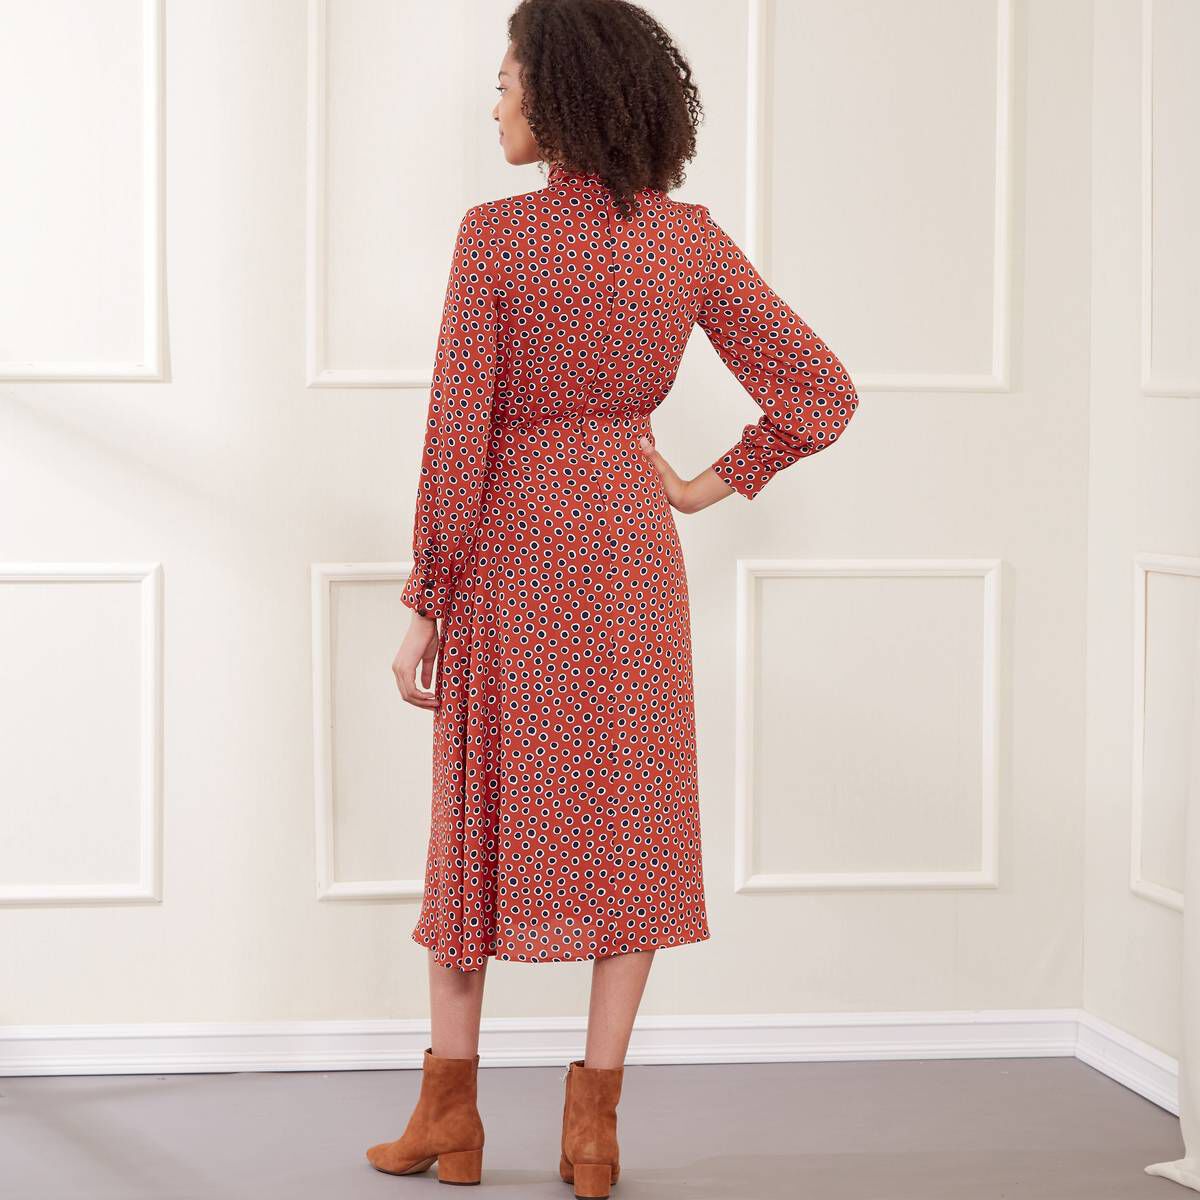 New Look Women's Dress Sewing Pattern N6682 (6-18) | Hobbycraft